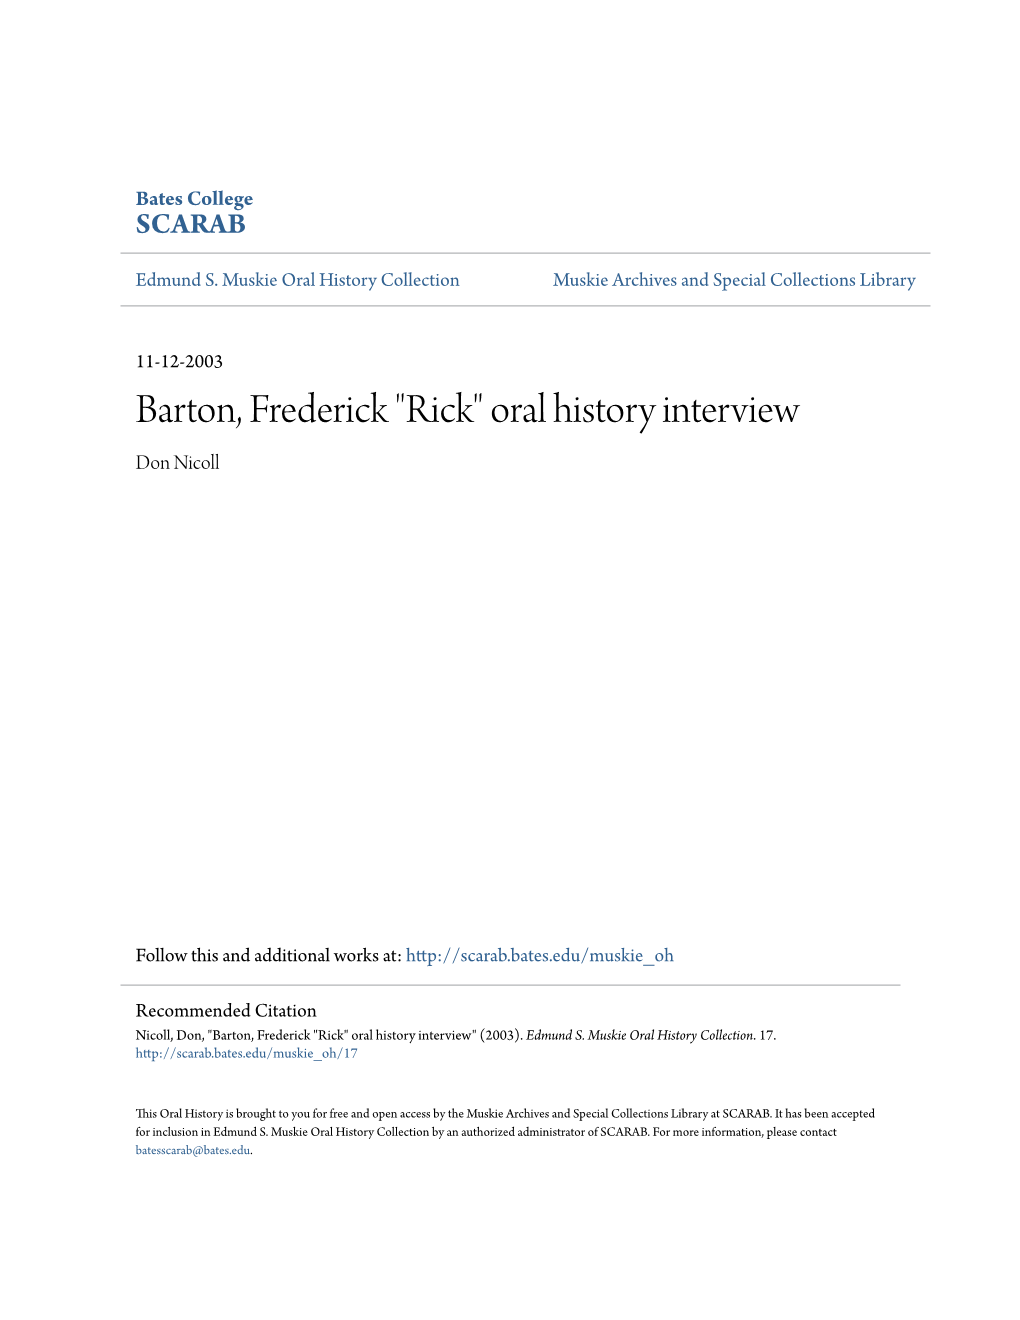 Barton, Frederick "Rick" Oral History Interview Don Nicoll